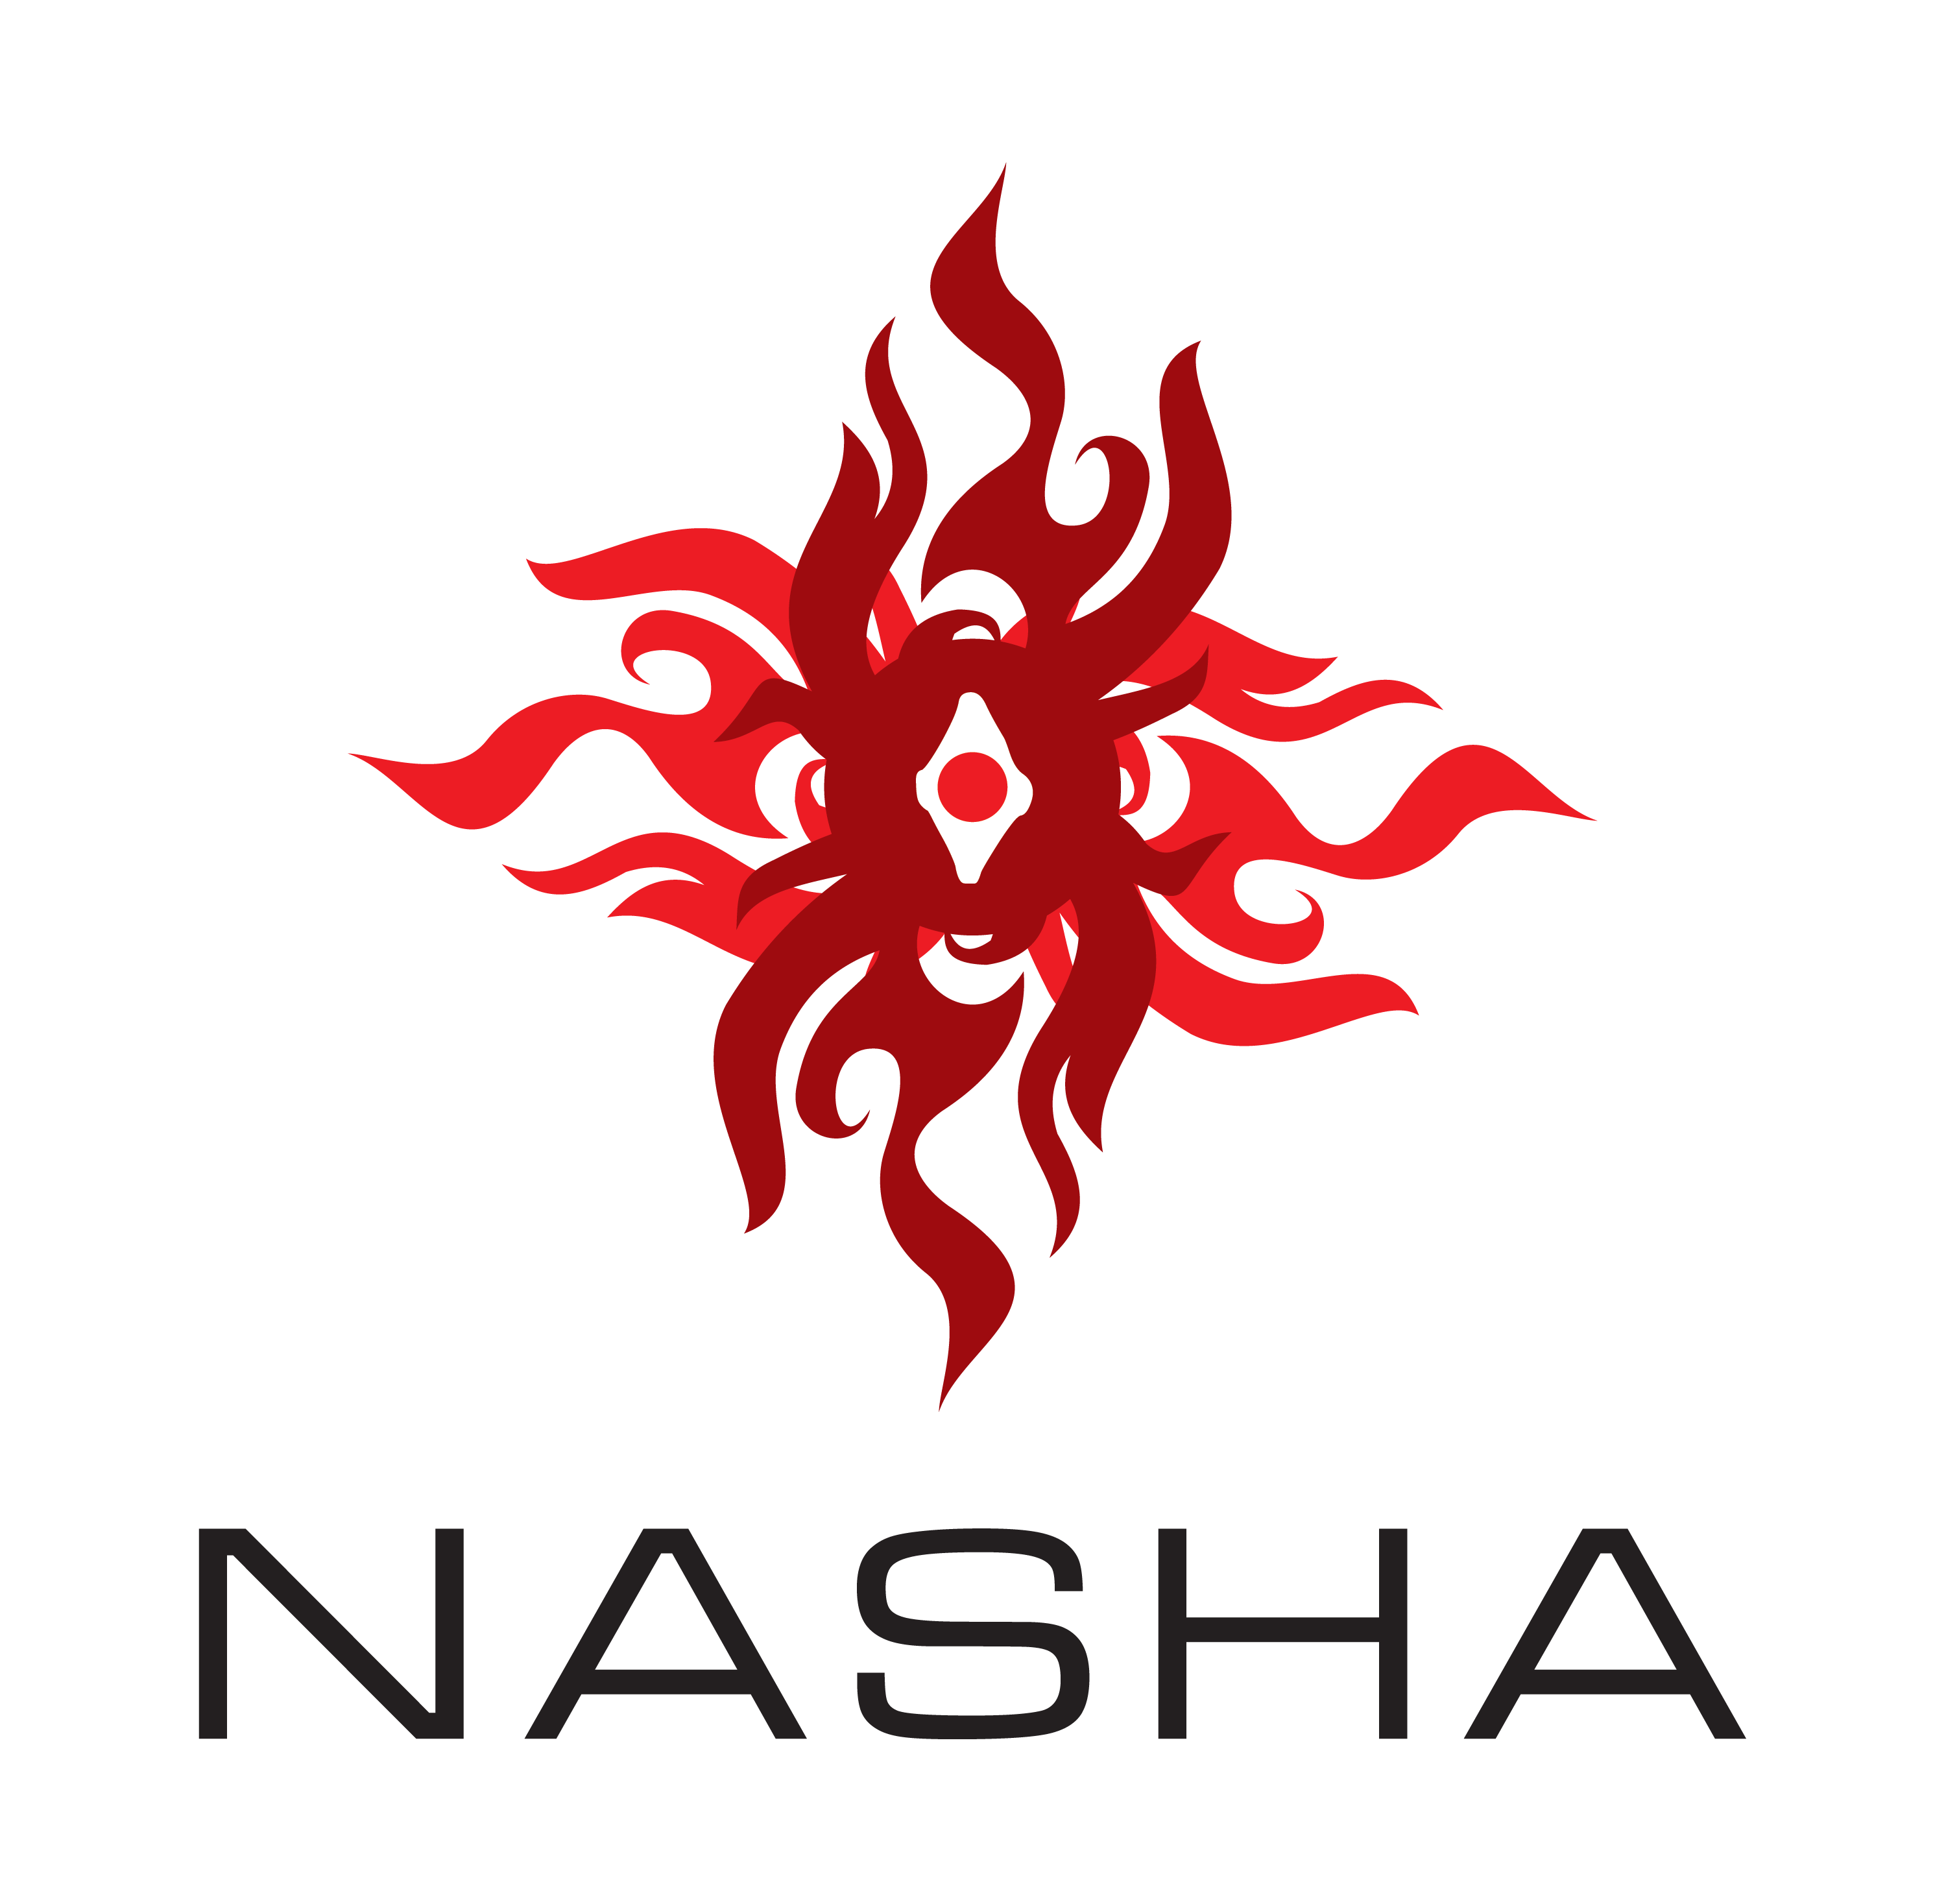 The logo of Nasha